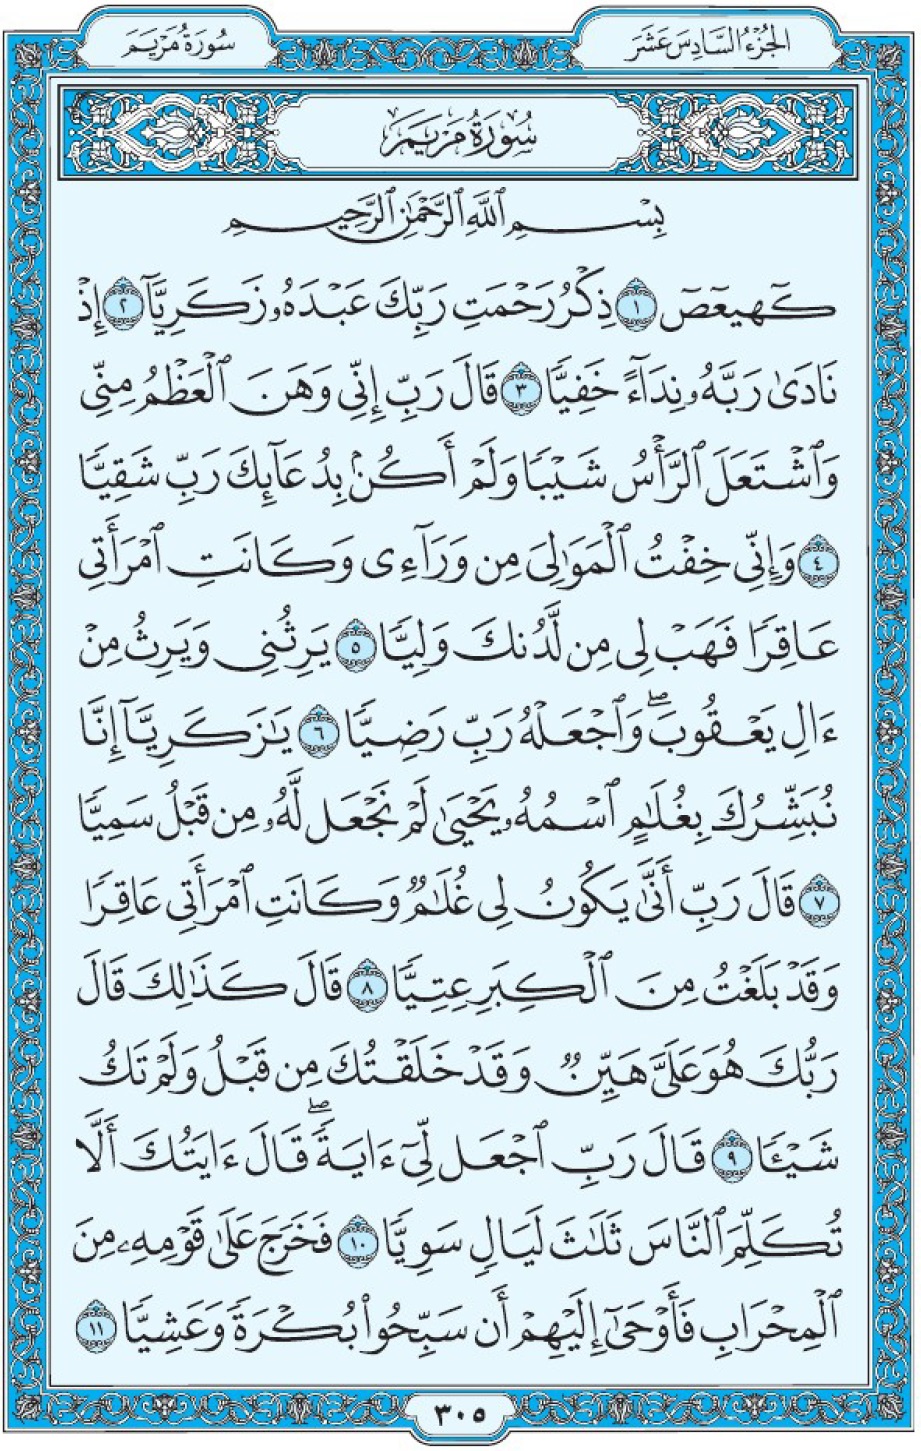 Коран Мединский мусхаф страница 305, сура 19 Марьям سورة ١٩ مريم 